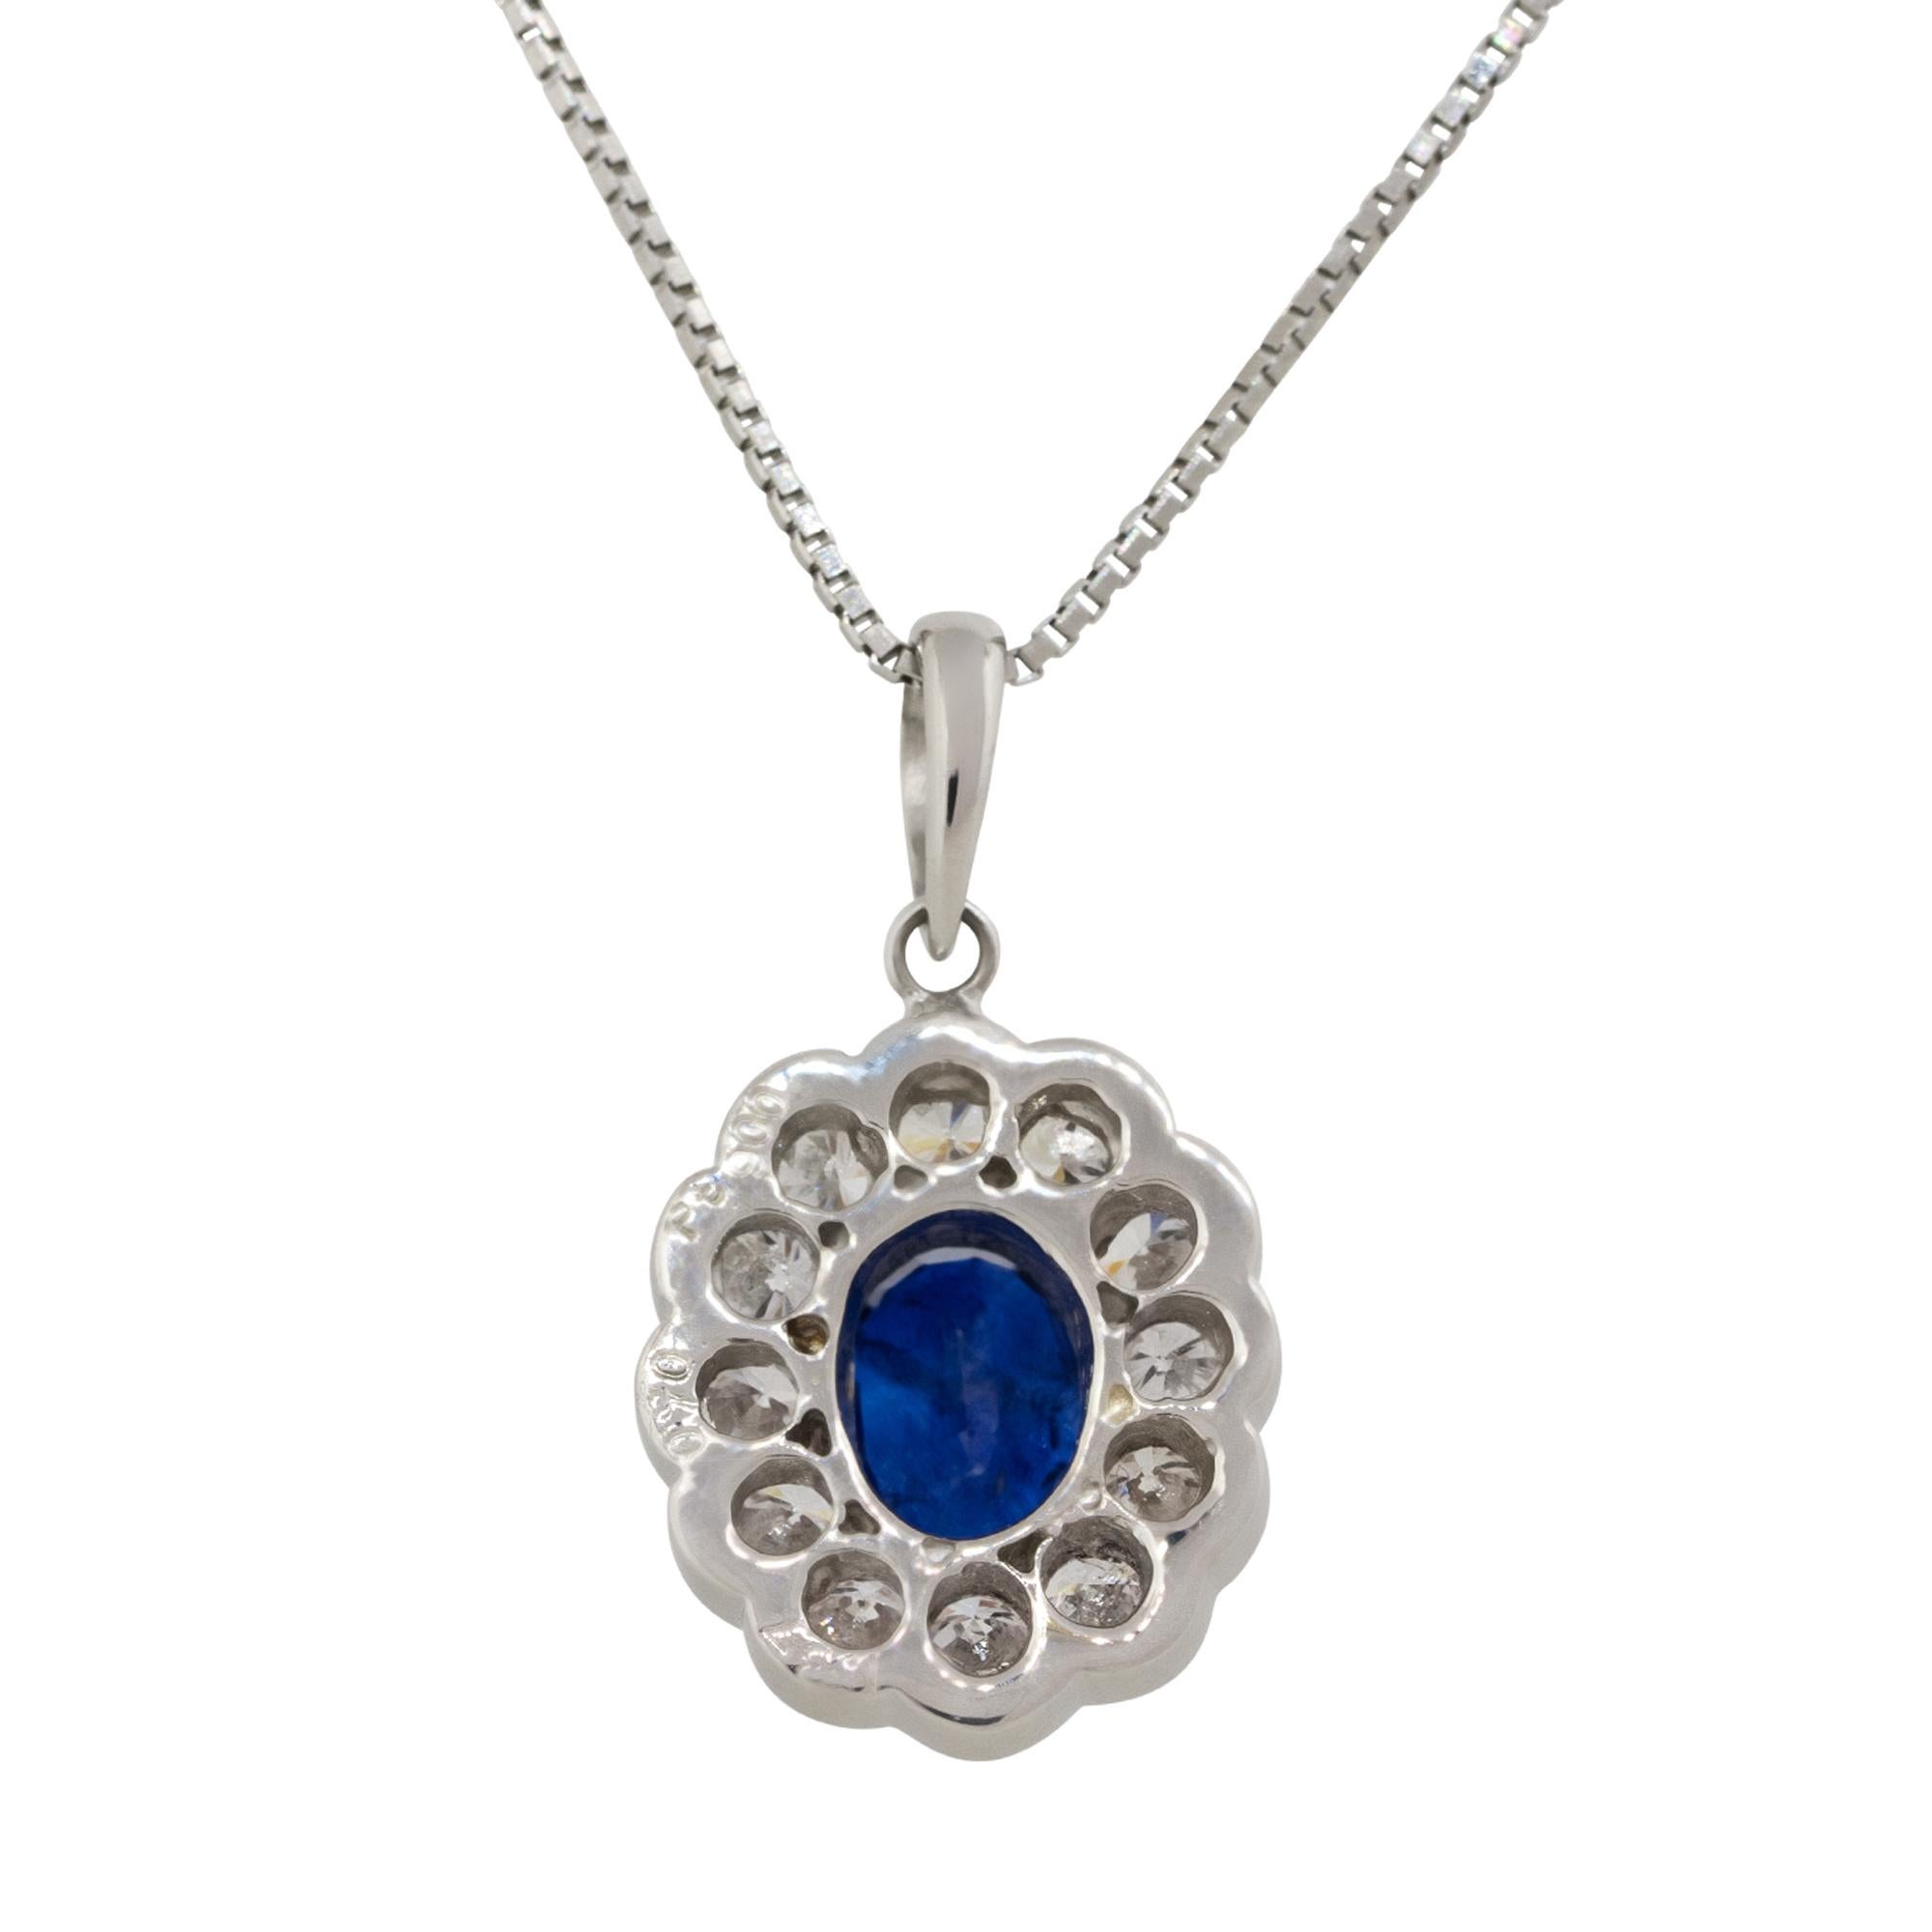 Women's or Men's 1.37 Carat Oval Cut Sapphire Pendant Necklace with Diamonds Platinum